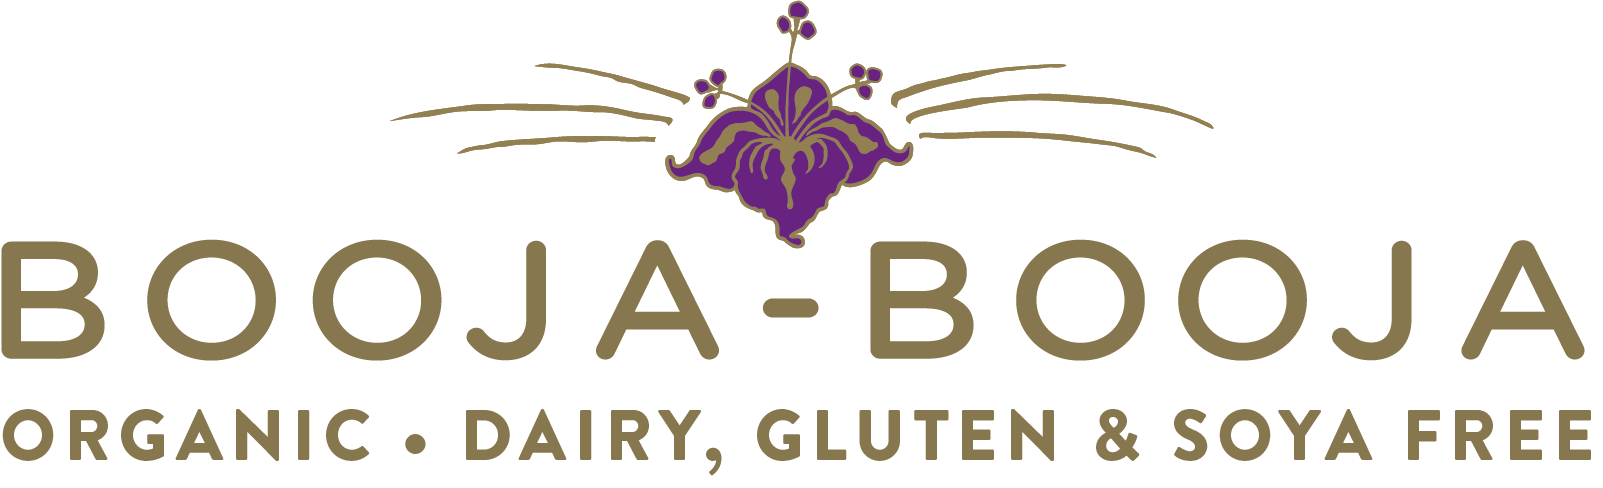 Booja Booja Logo